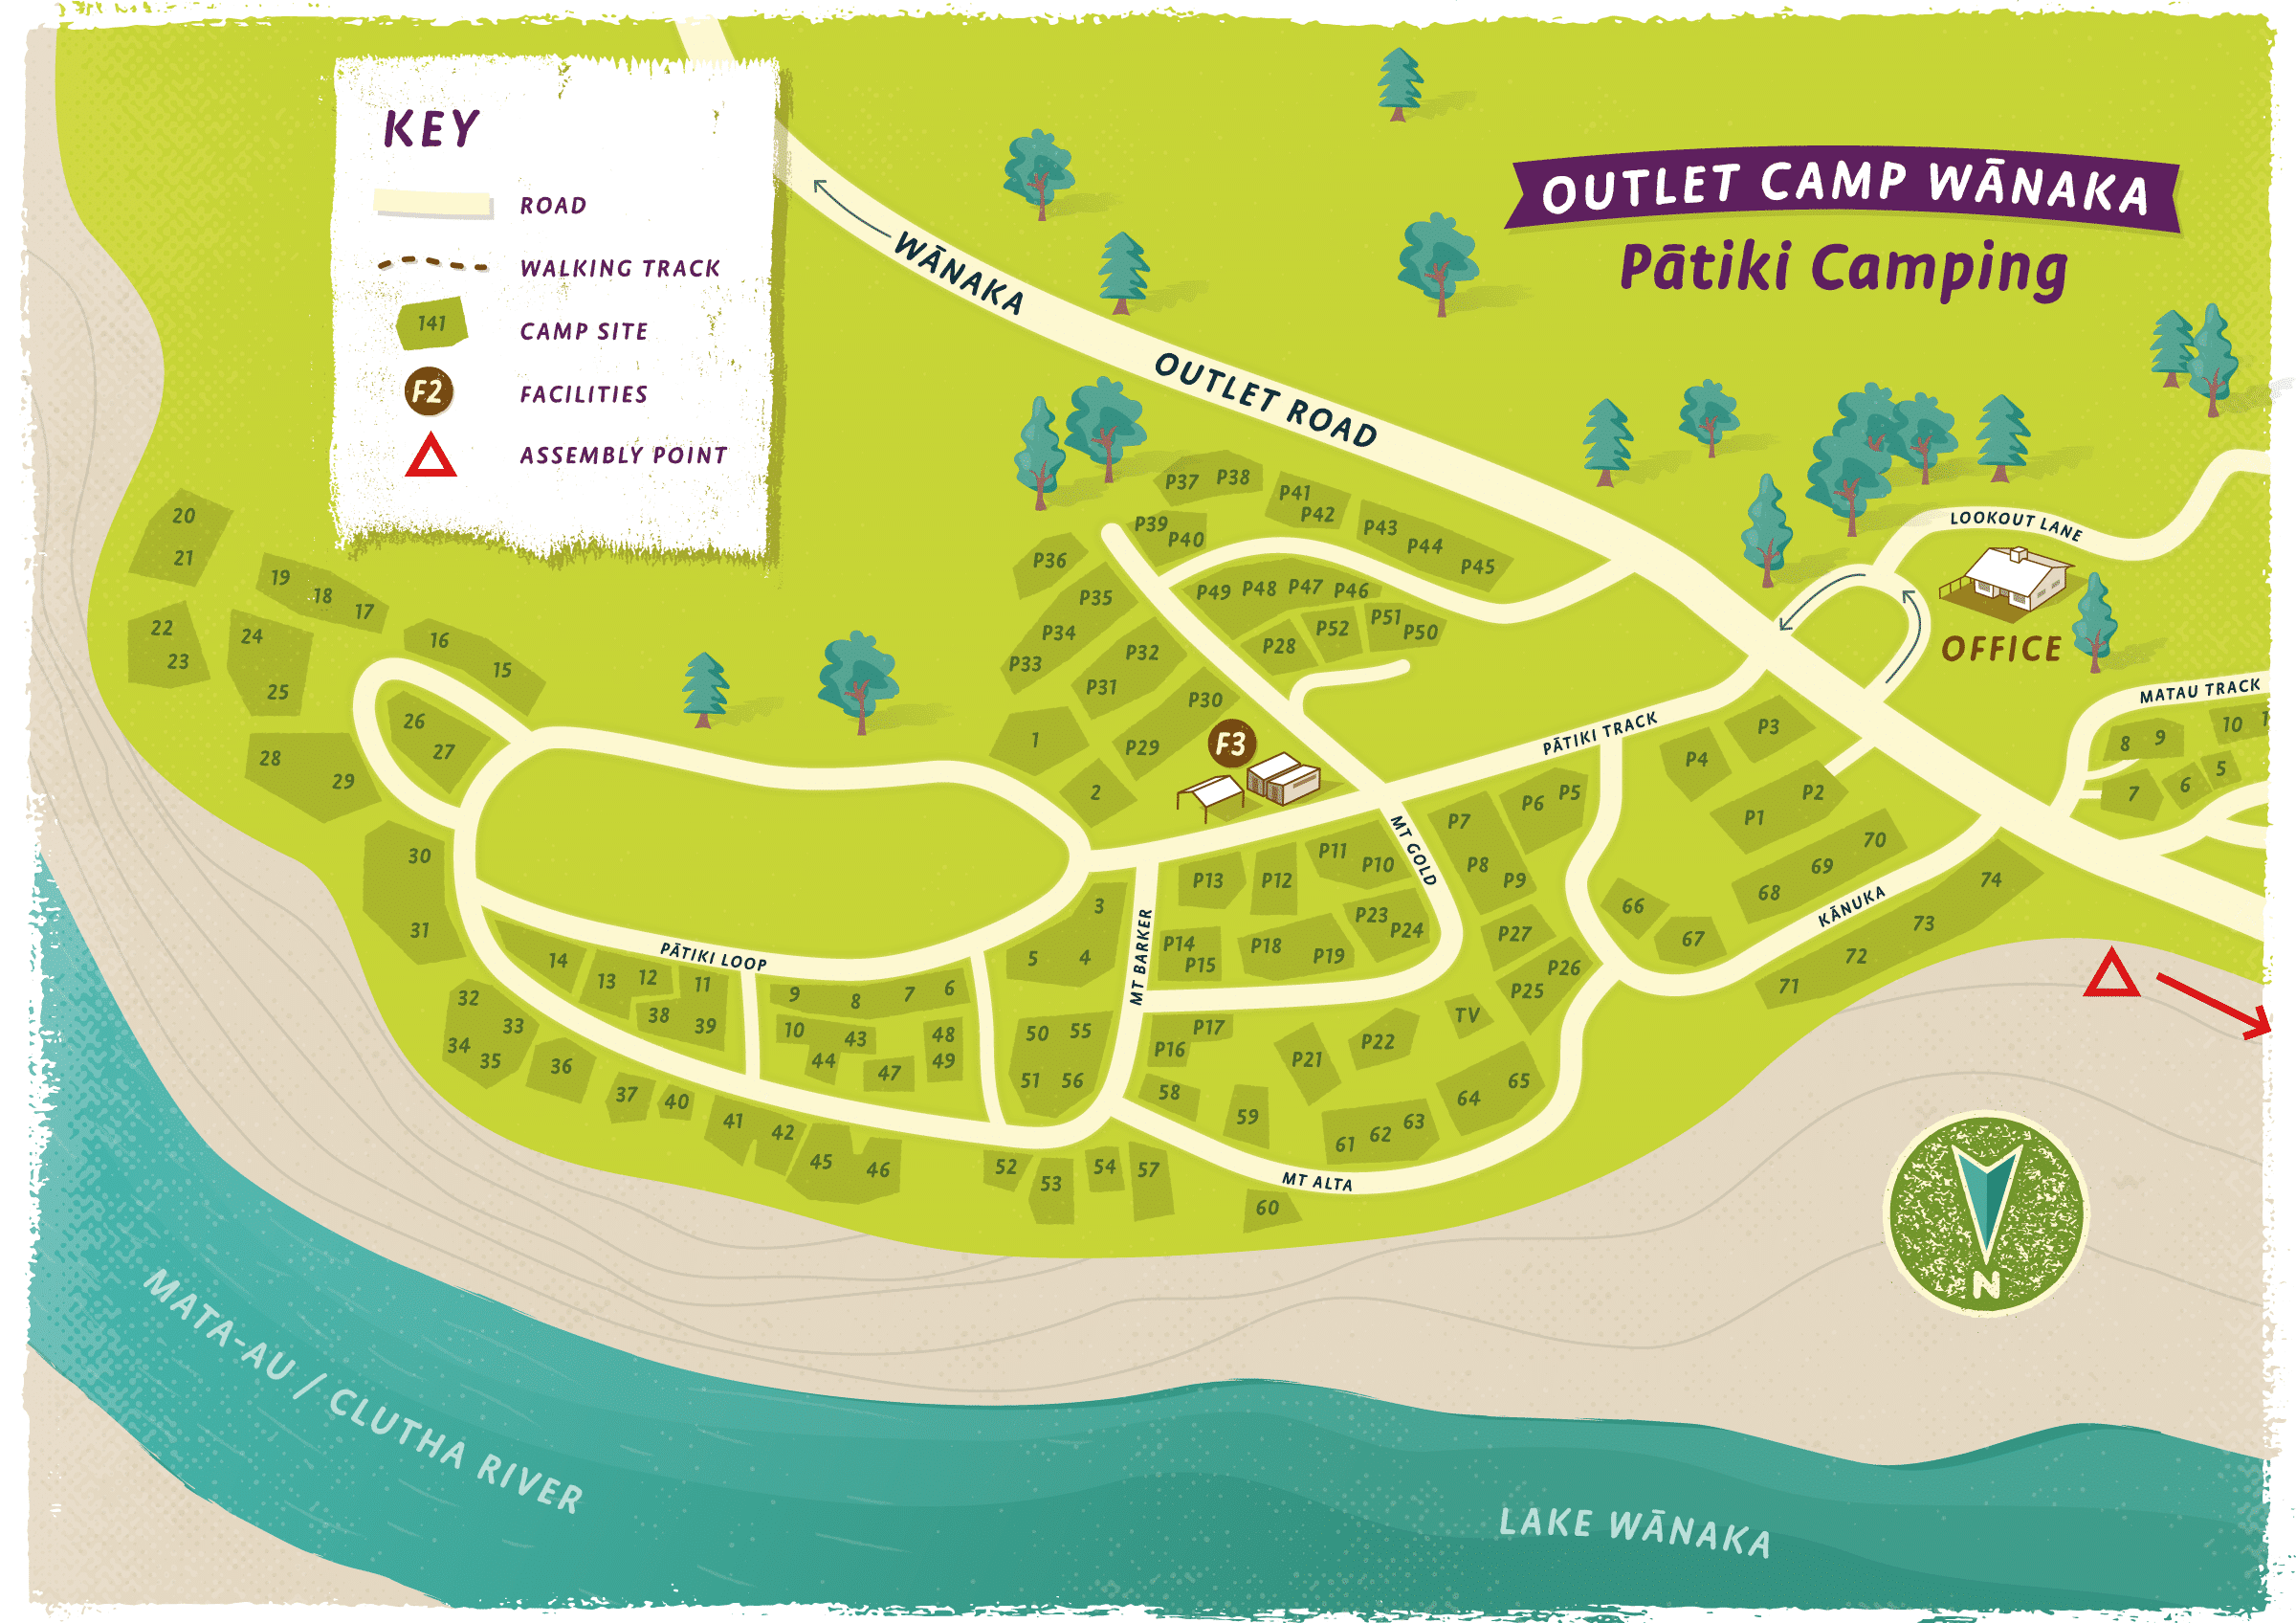 Outlet Camp Wānaka - Pātiki Camping